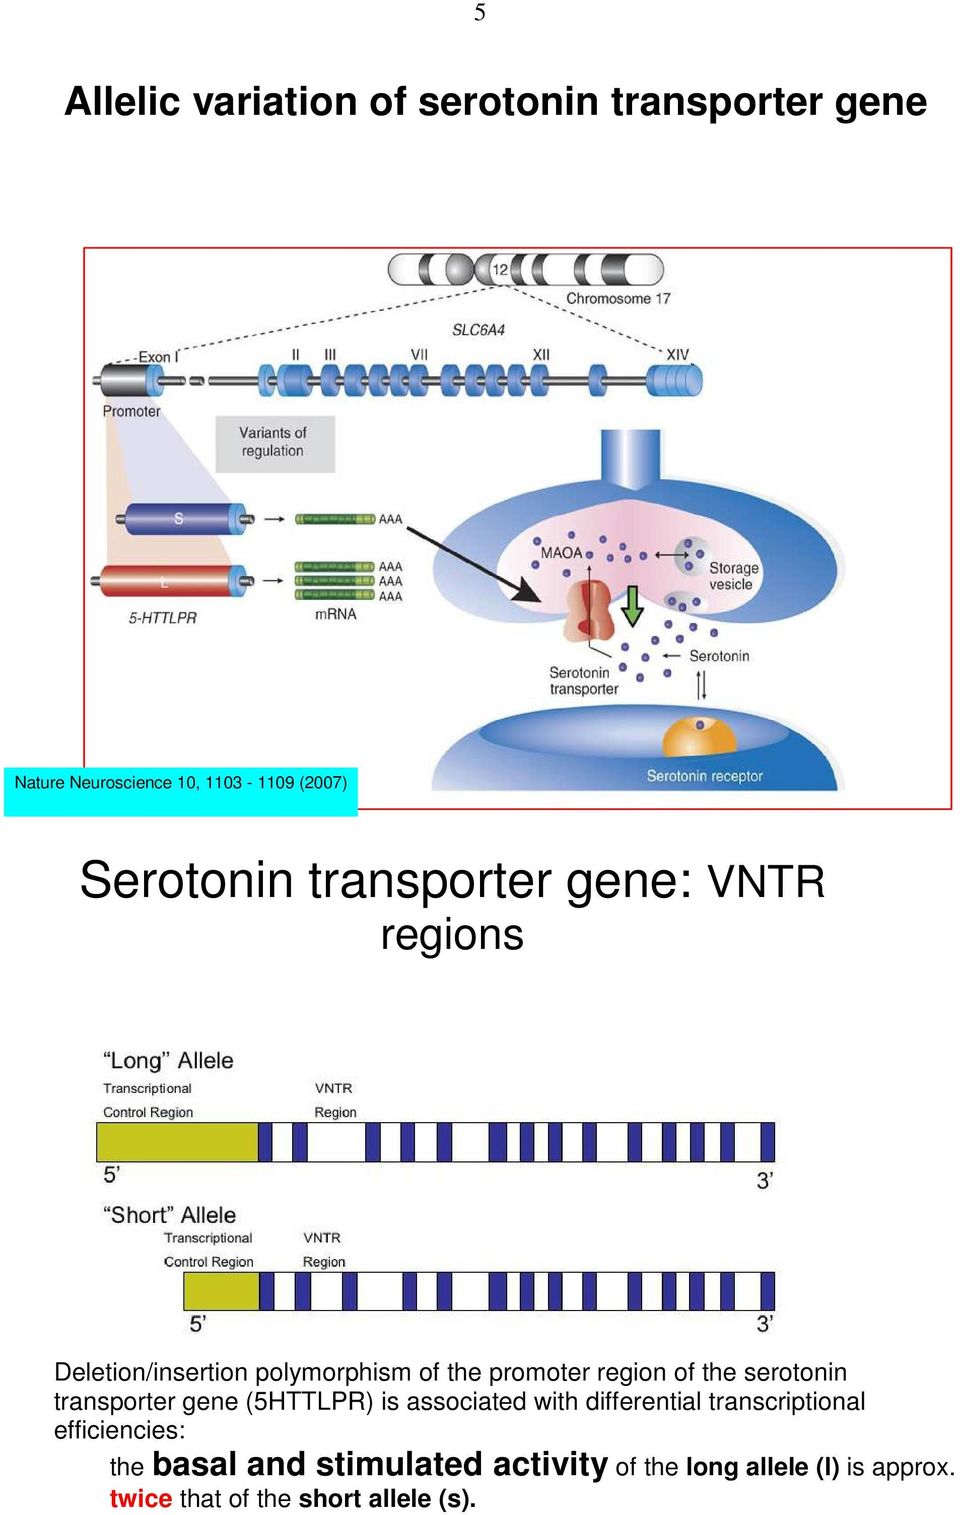 the serotonin transporter gene (5HTTLPR) is associated with differential transcriptional